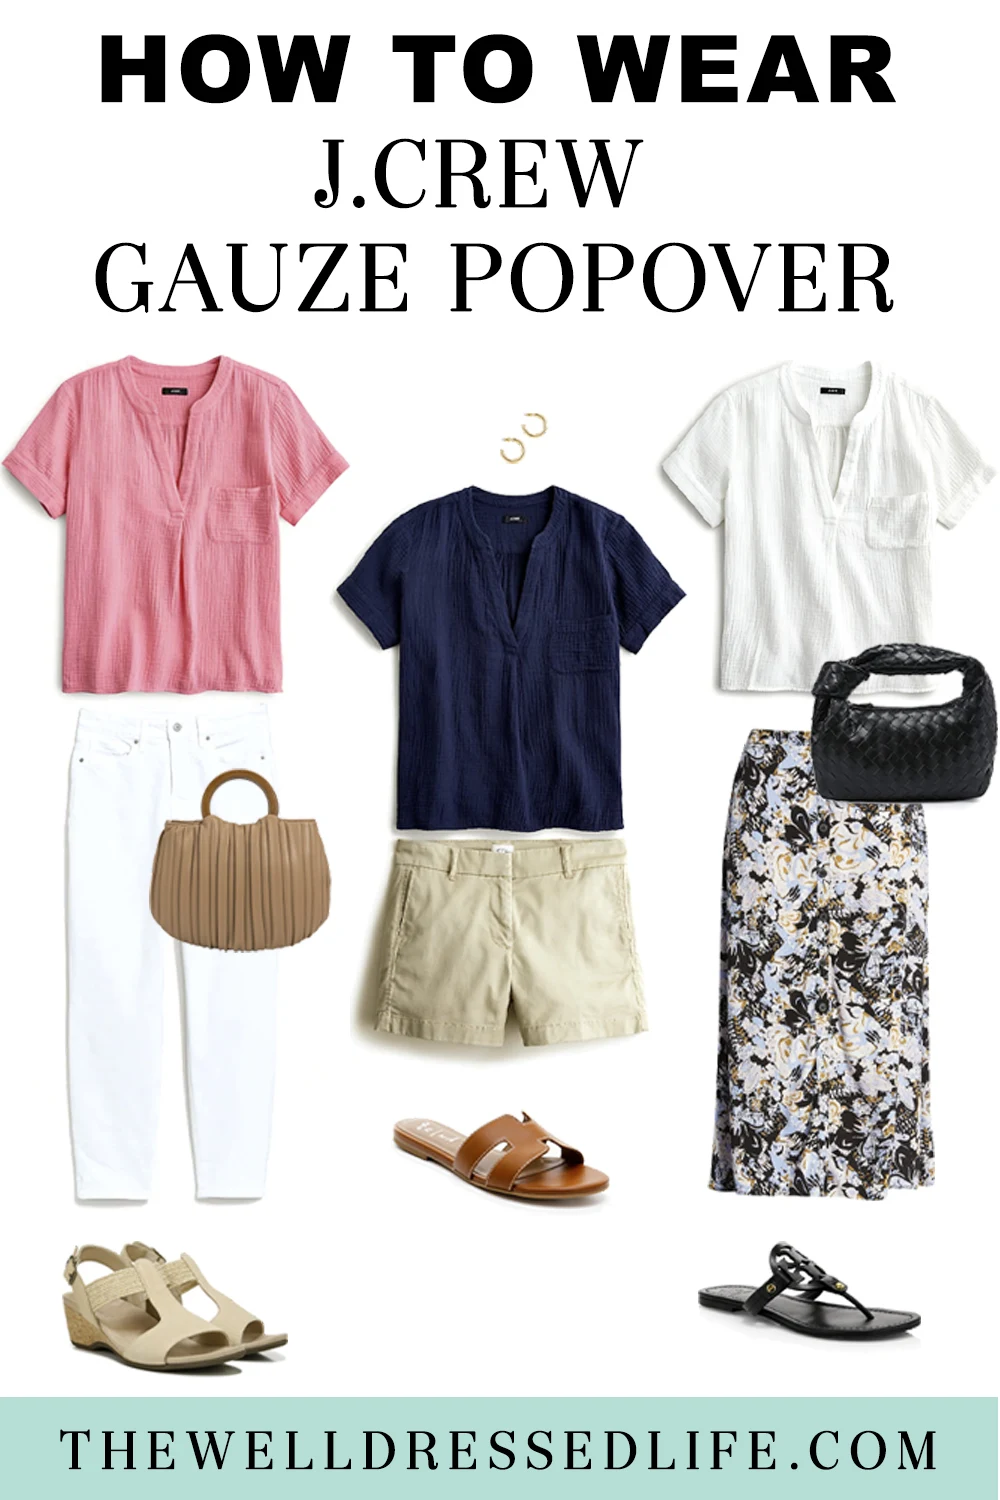 How to Wear the J.Crew Gauze Popover